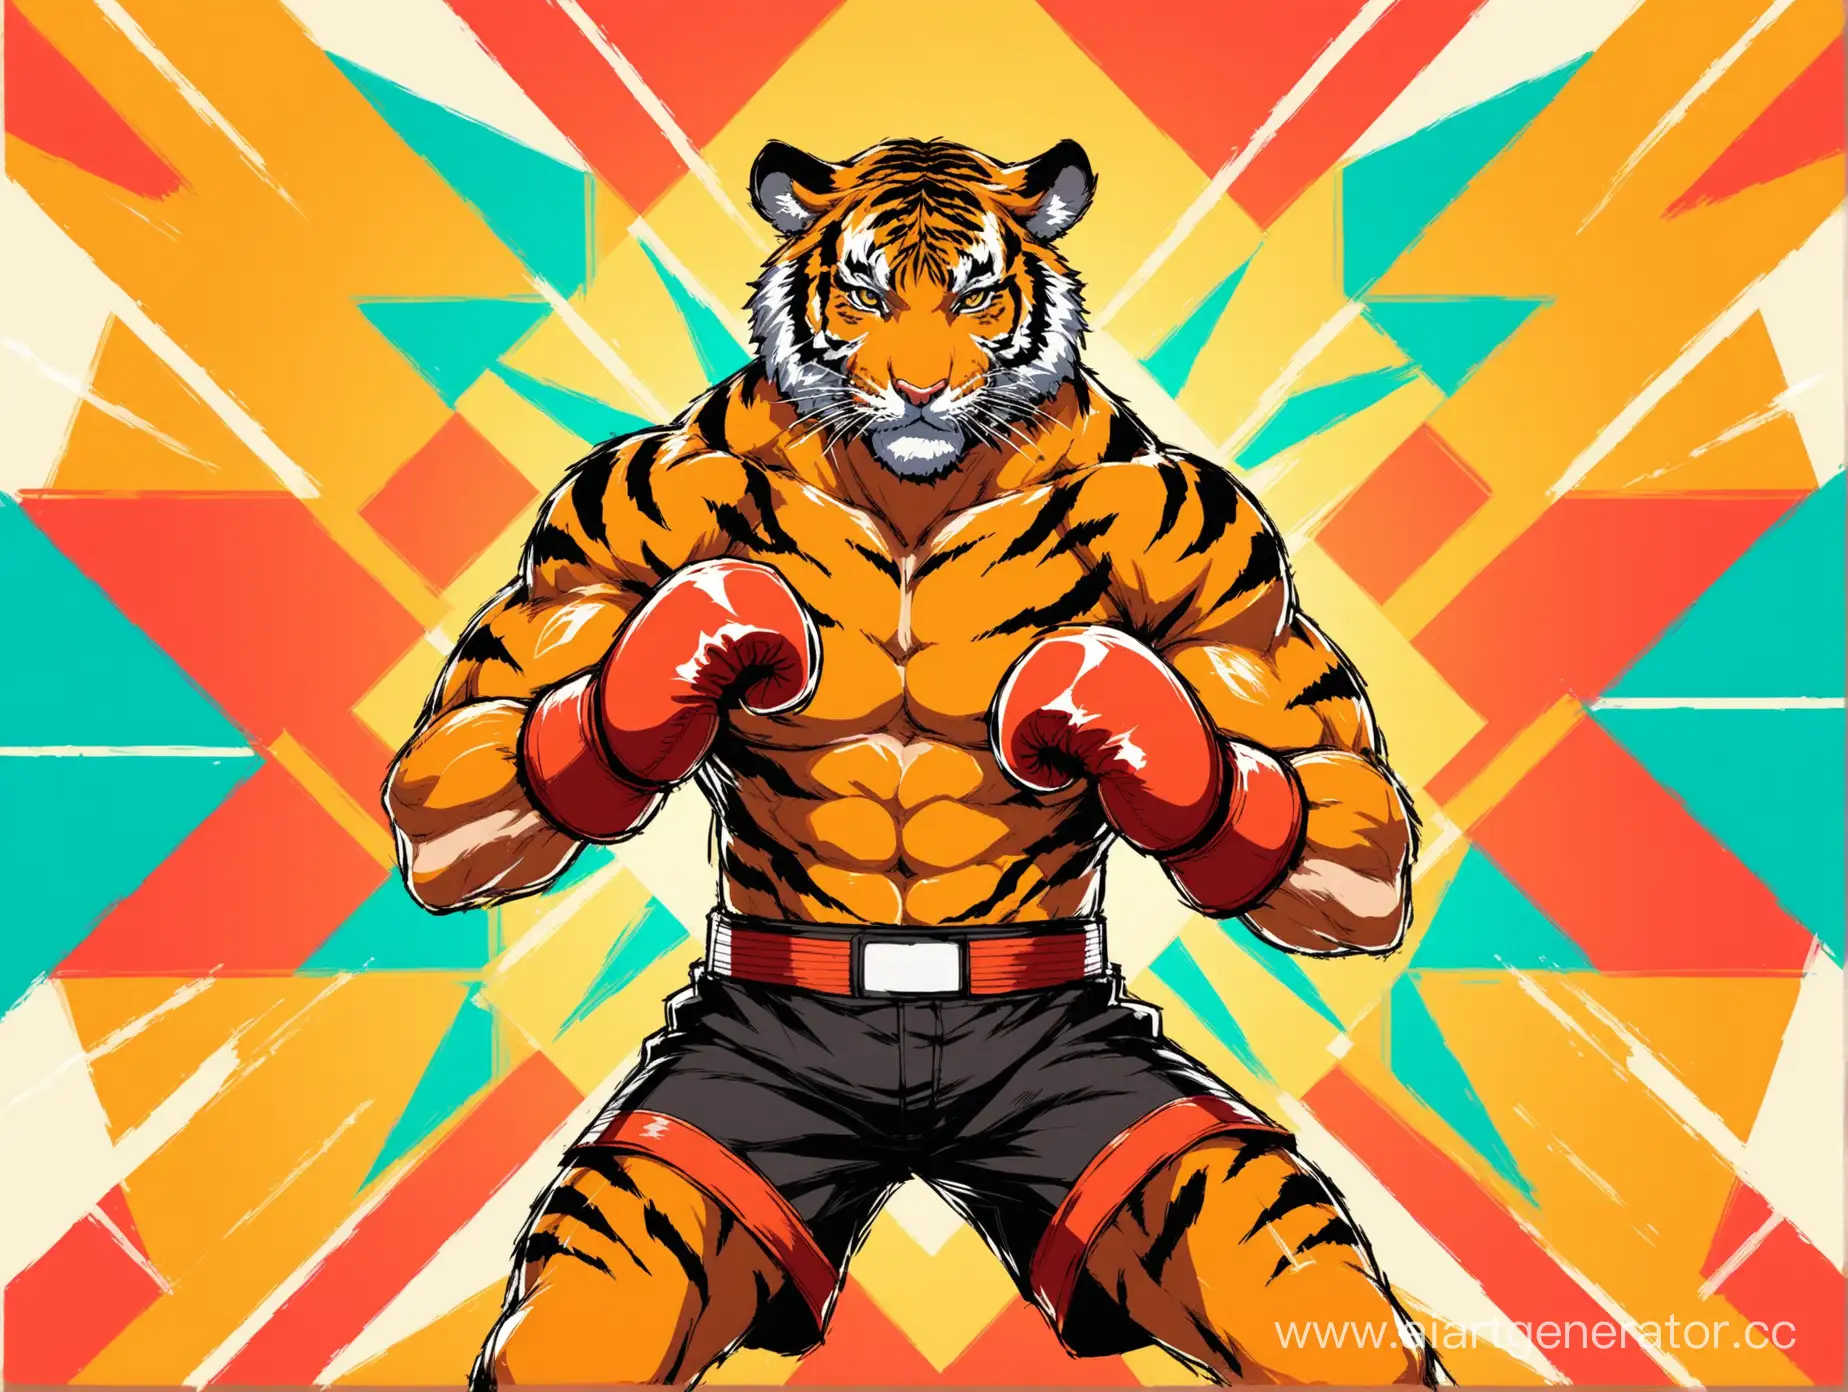 Dynamic-Tiger-Kickboxer-Against-Vivid-Geometric-Backdrop